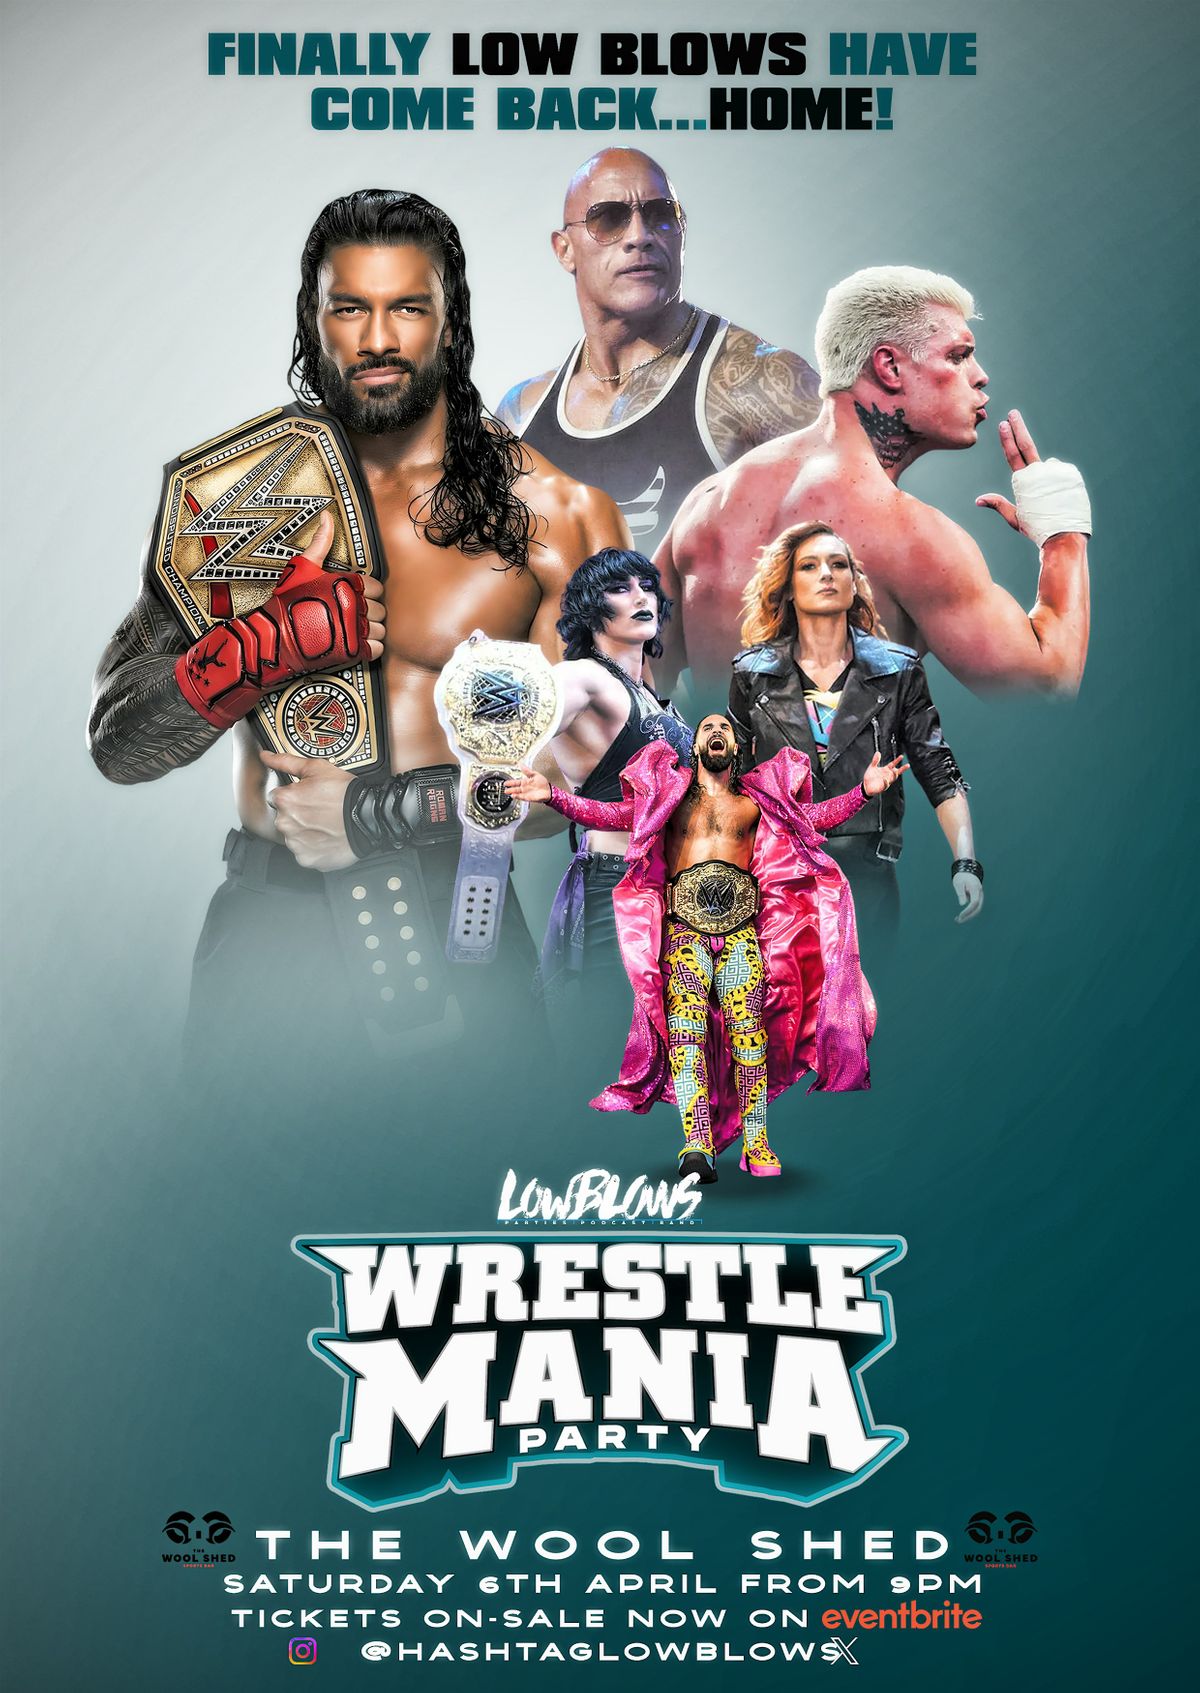 WWE WrestleMania XL Saturday @ The Wool Shed